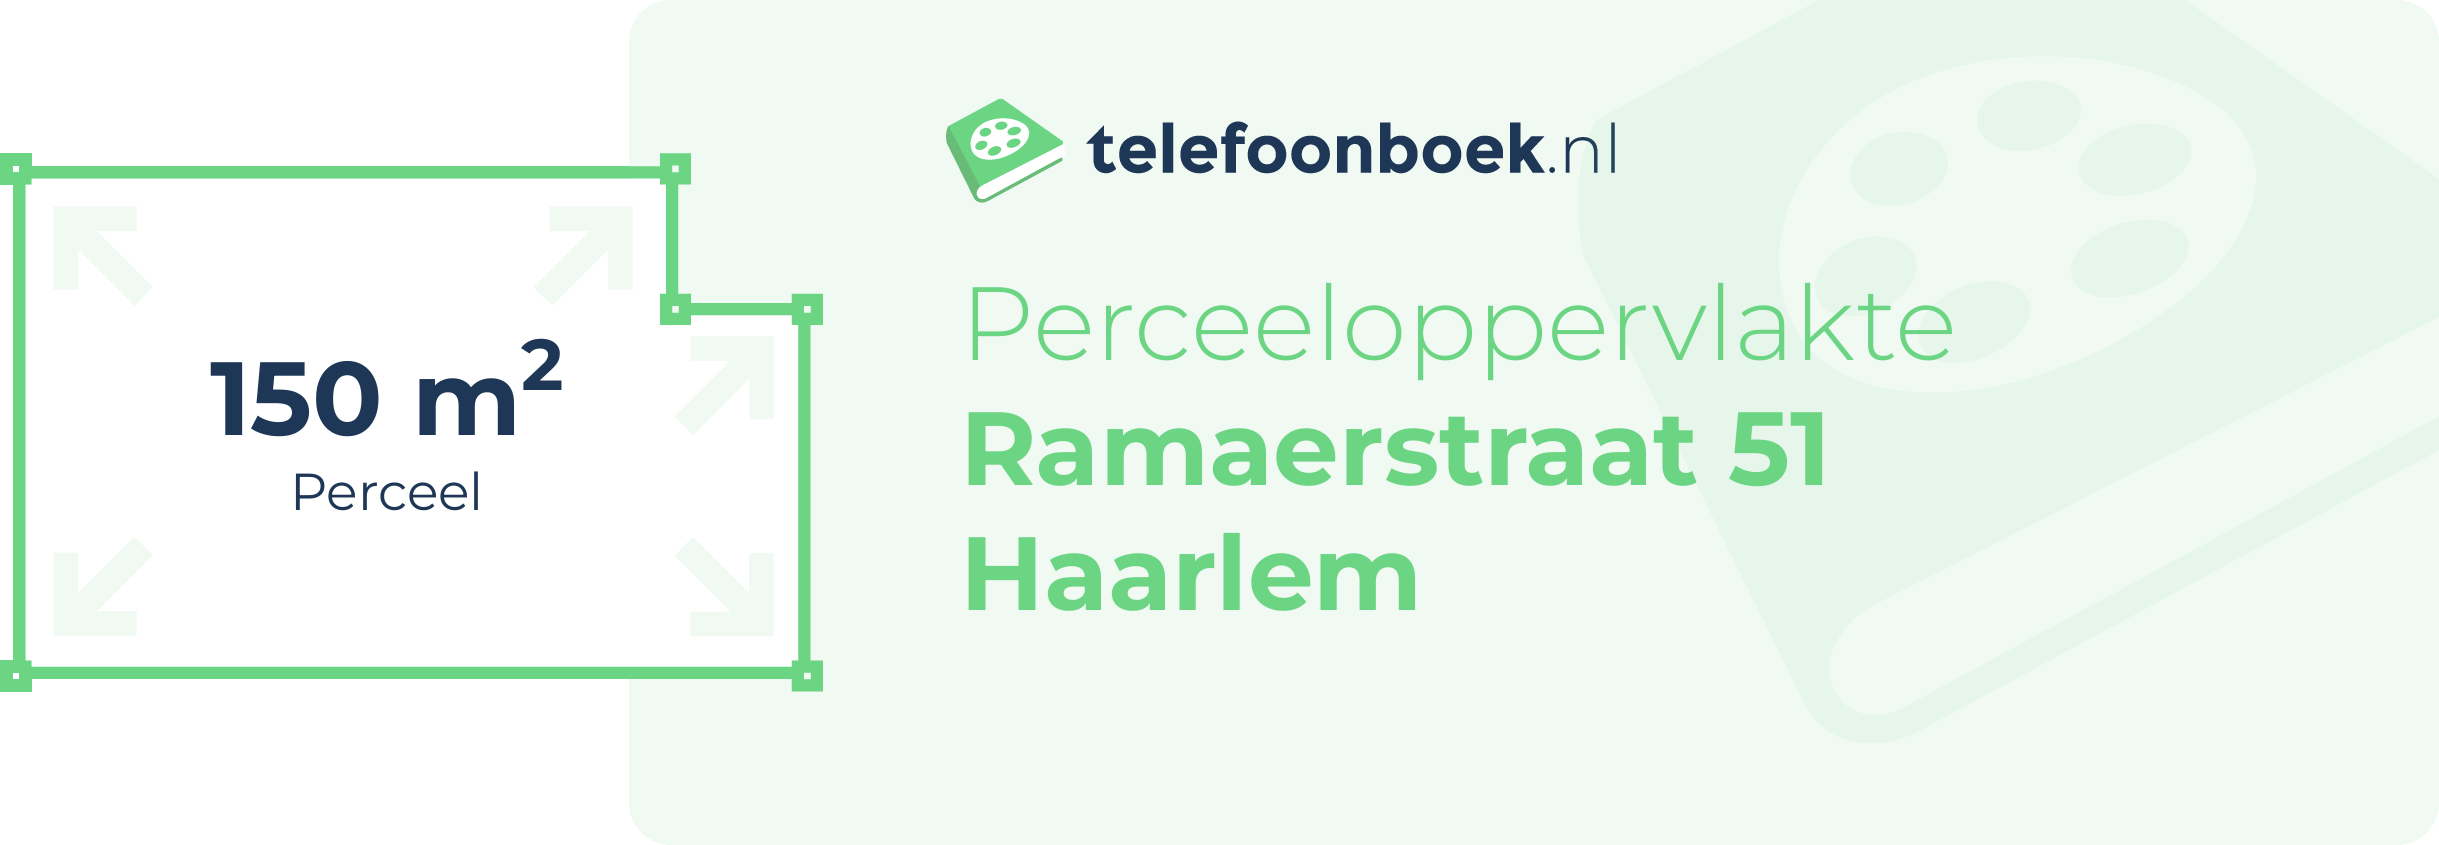 Perceeloppervlakte Ramaerstraat 51 Haarlem